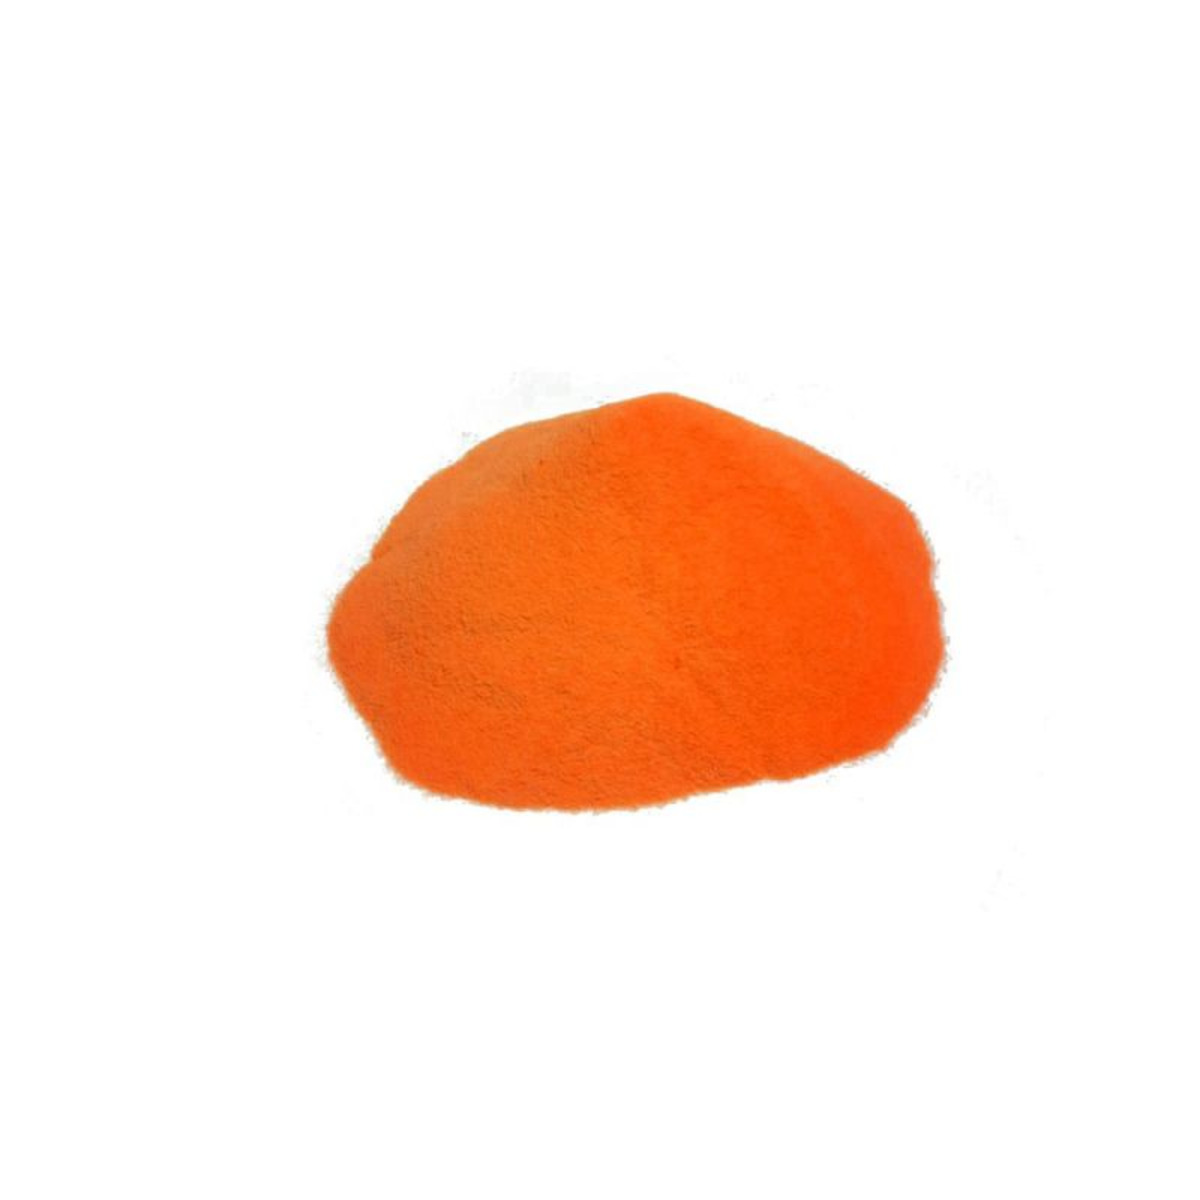 M2 Fishing Plastgum Powder Plasticizer For Ballast -  Orange - 100 g        